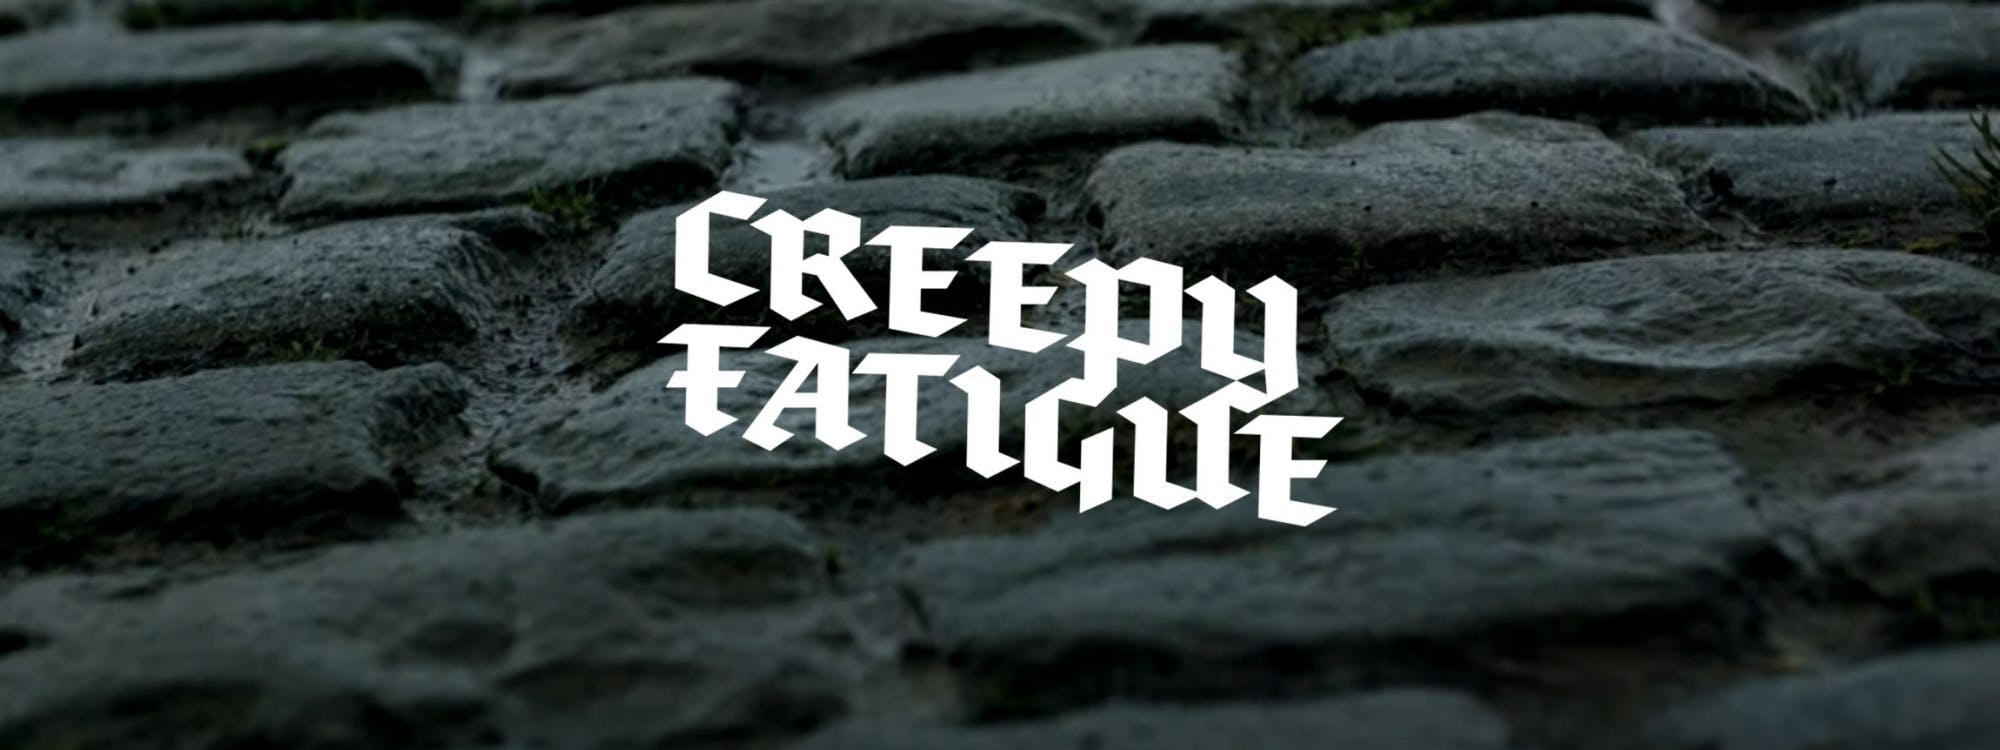 Creepy Fatigue